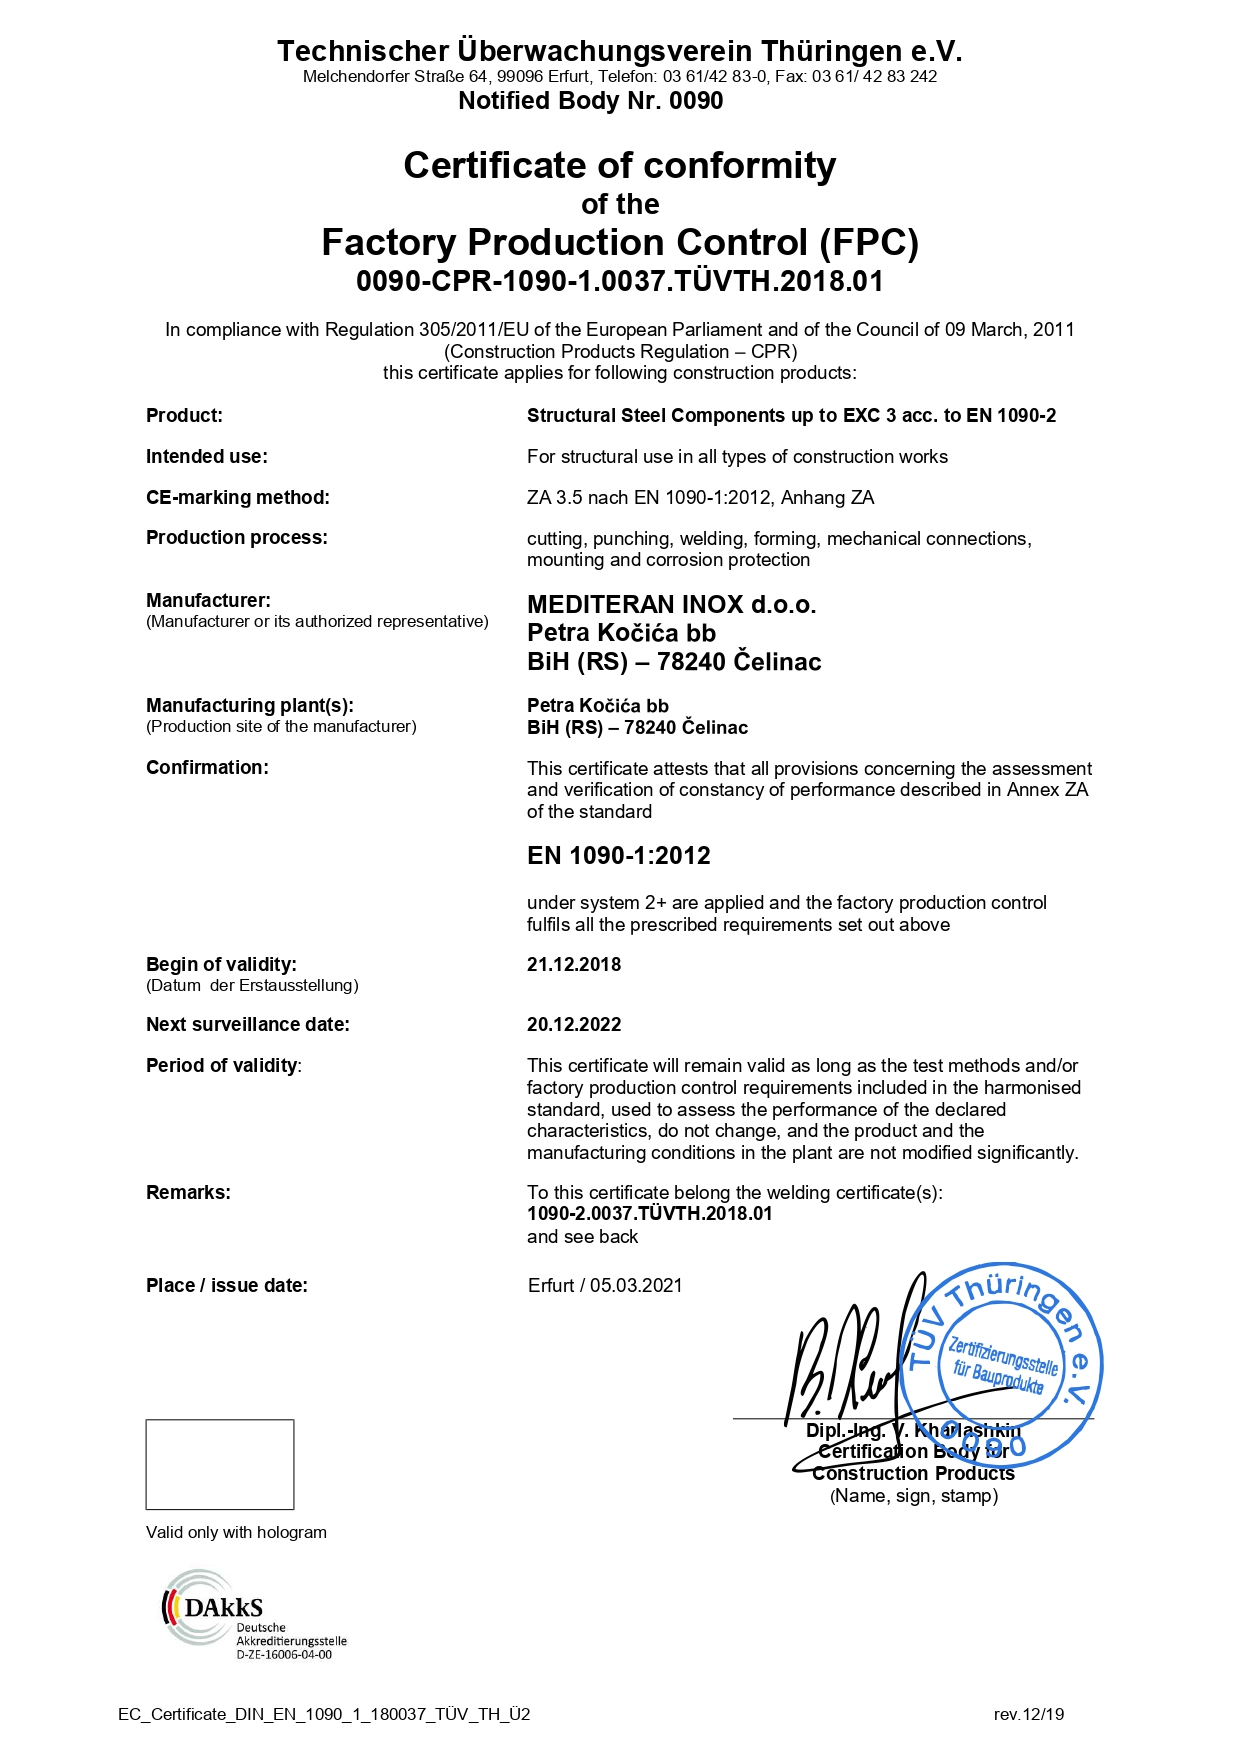 MEDITERAN INOX doo FB CPR 1090 1 Certificate FPC page 0001